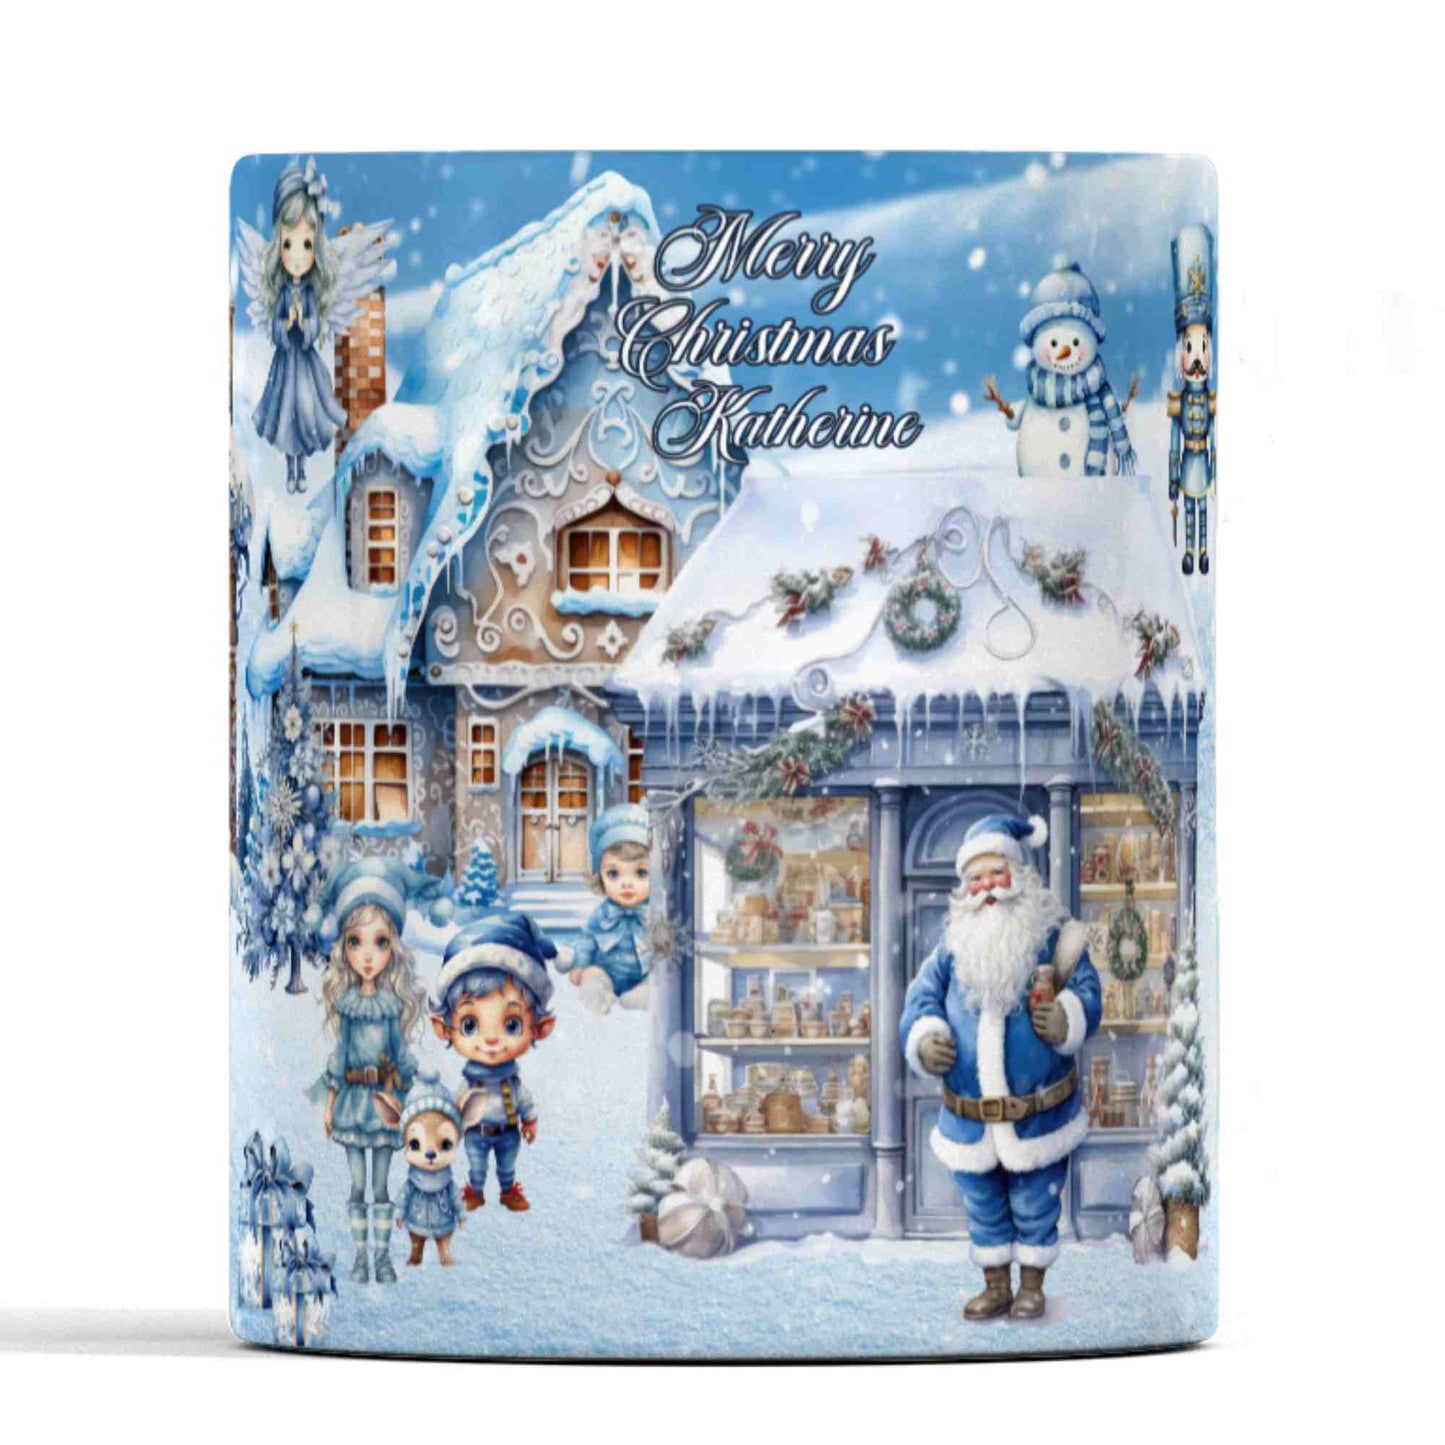 Blue Christmas scene personalised 11oz mug